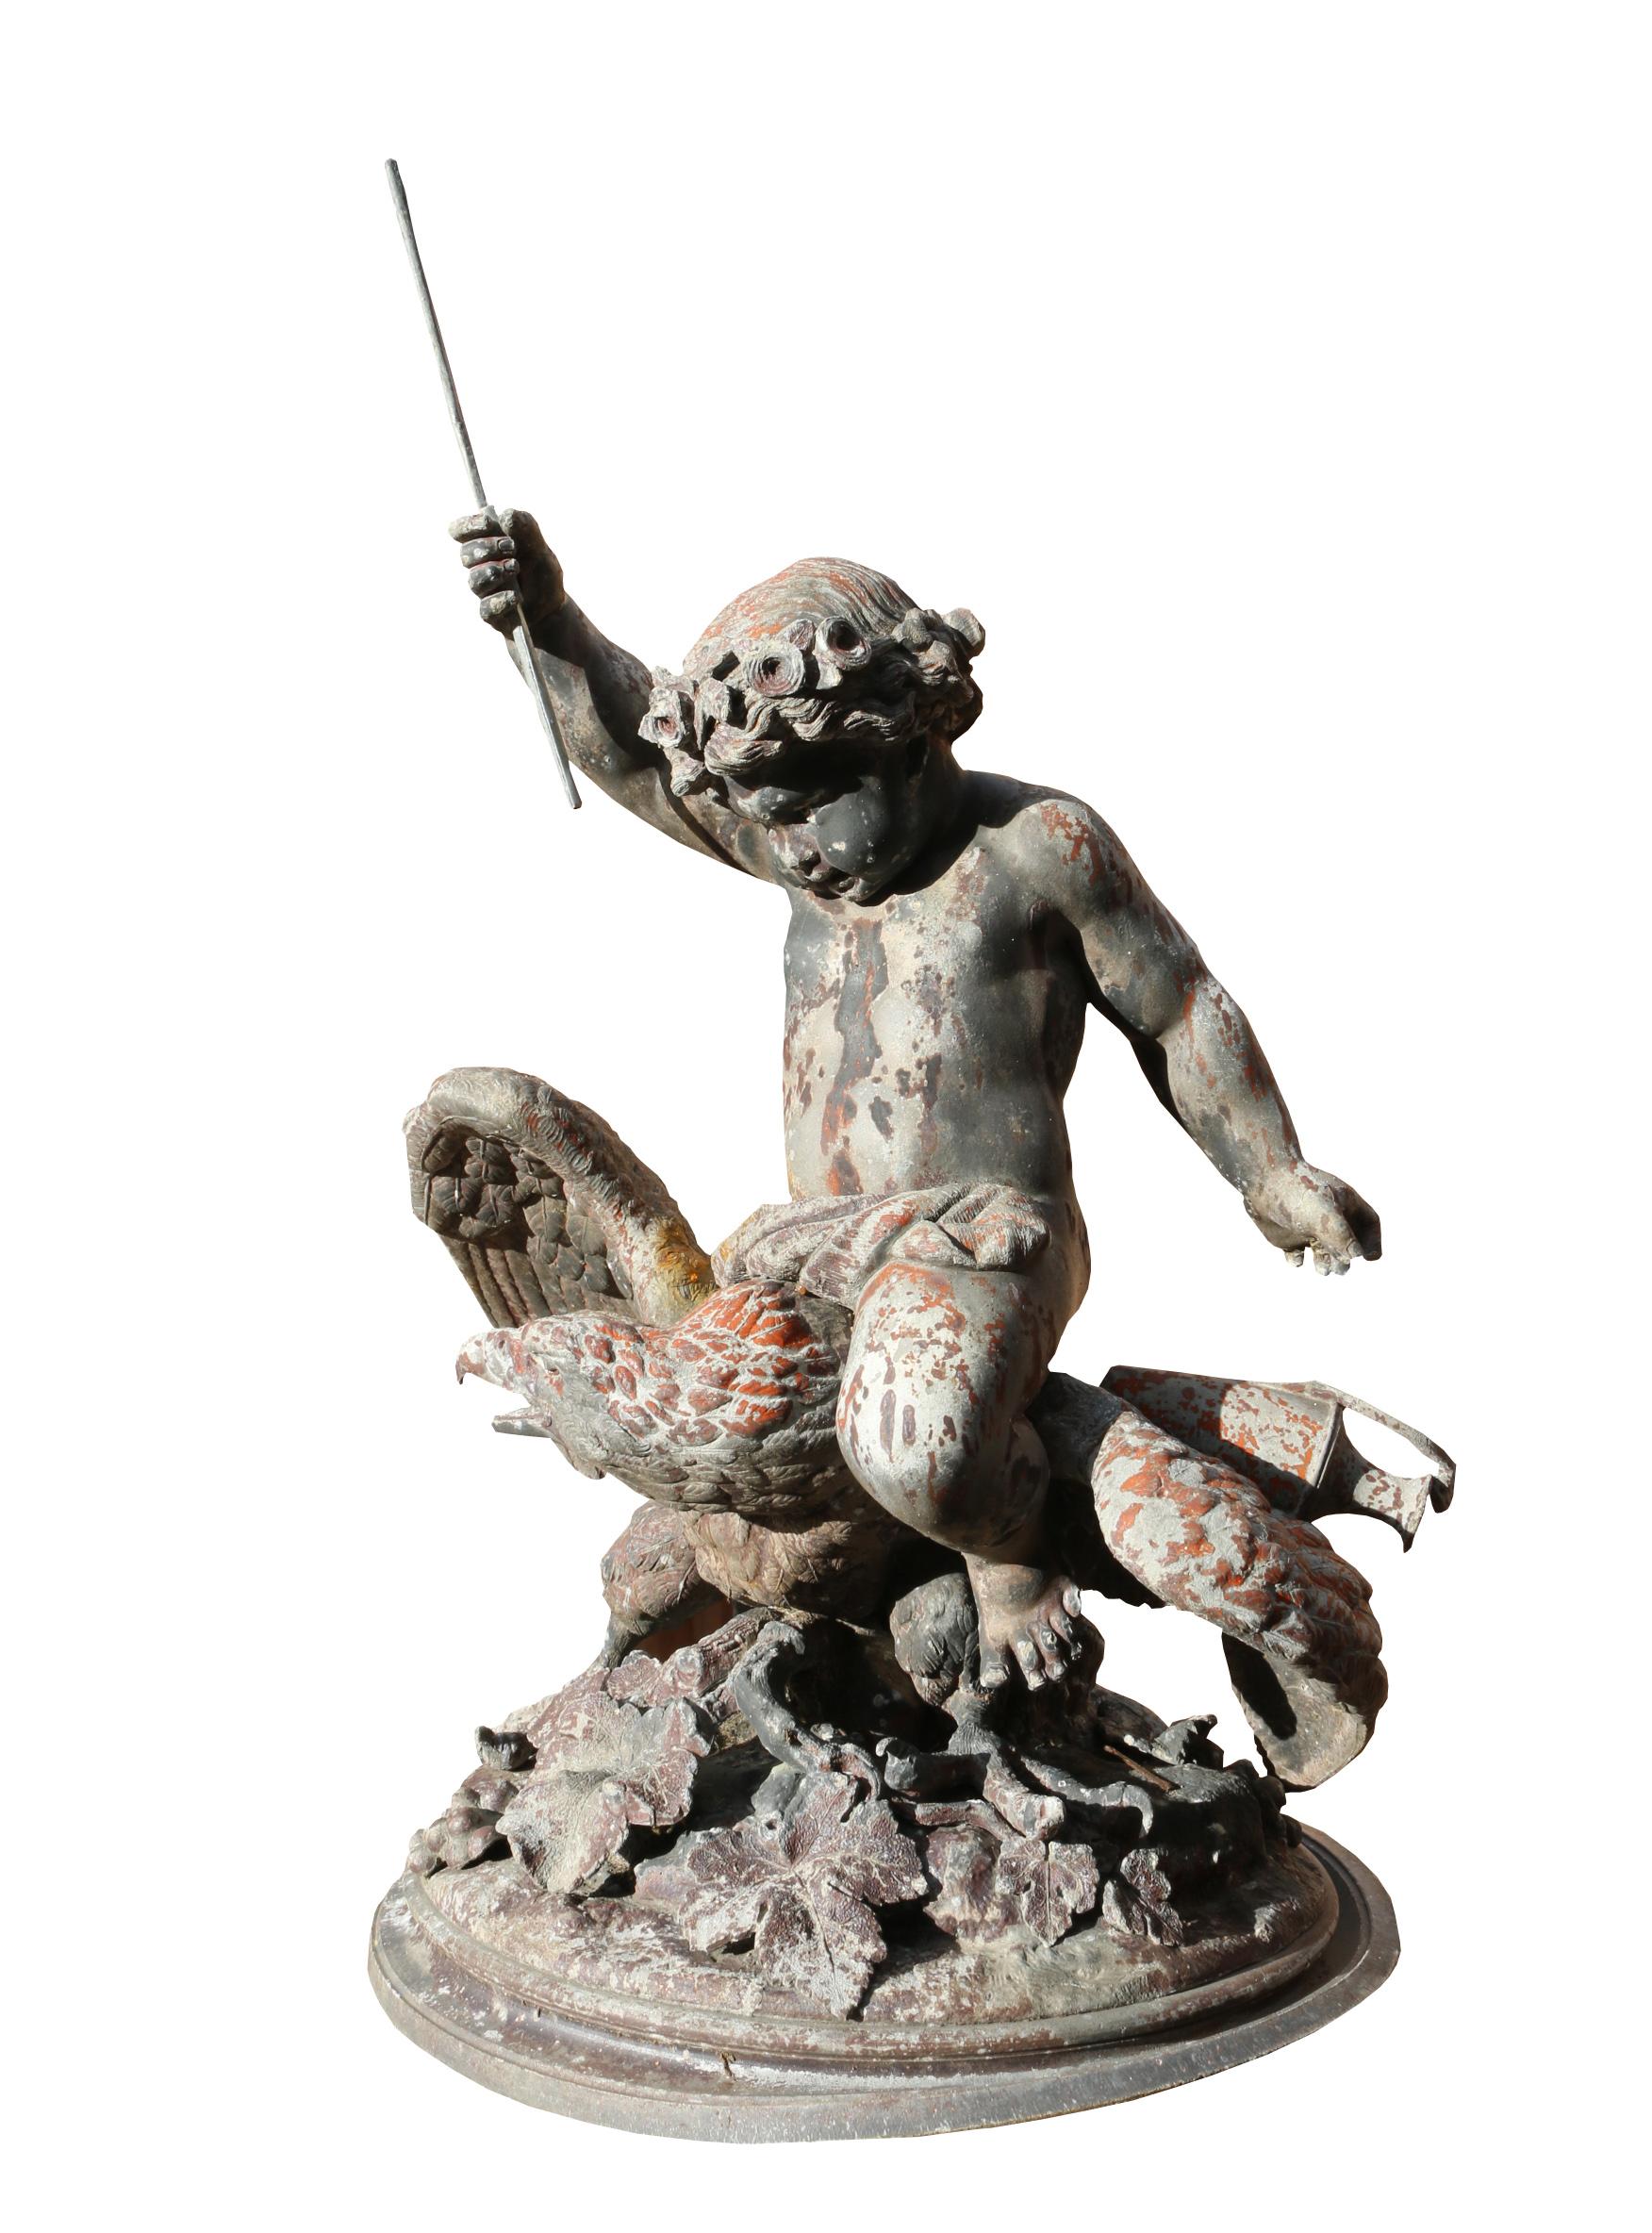 19th century cast zinc sculpture, putti riding an eagle. Measures: Height 44 cm

Base diameter 26.5 cm

Weight 5 kg approx.